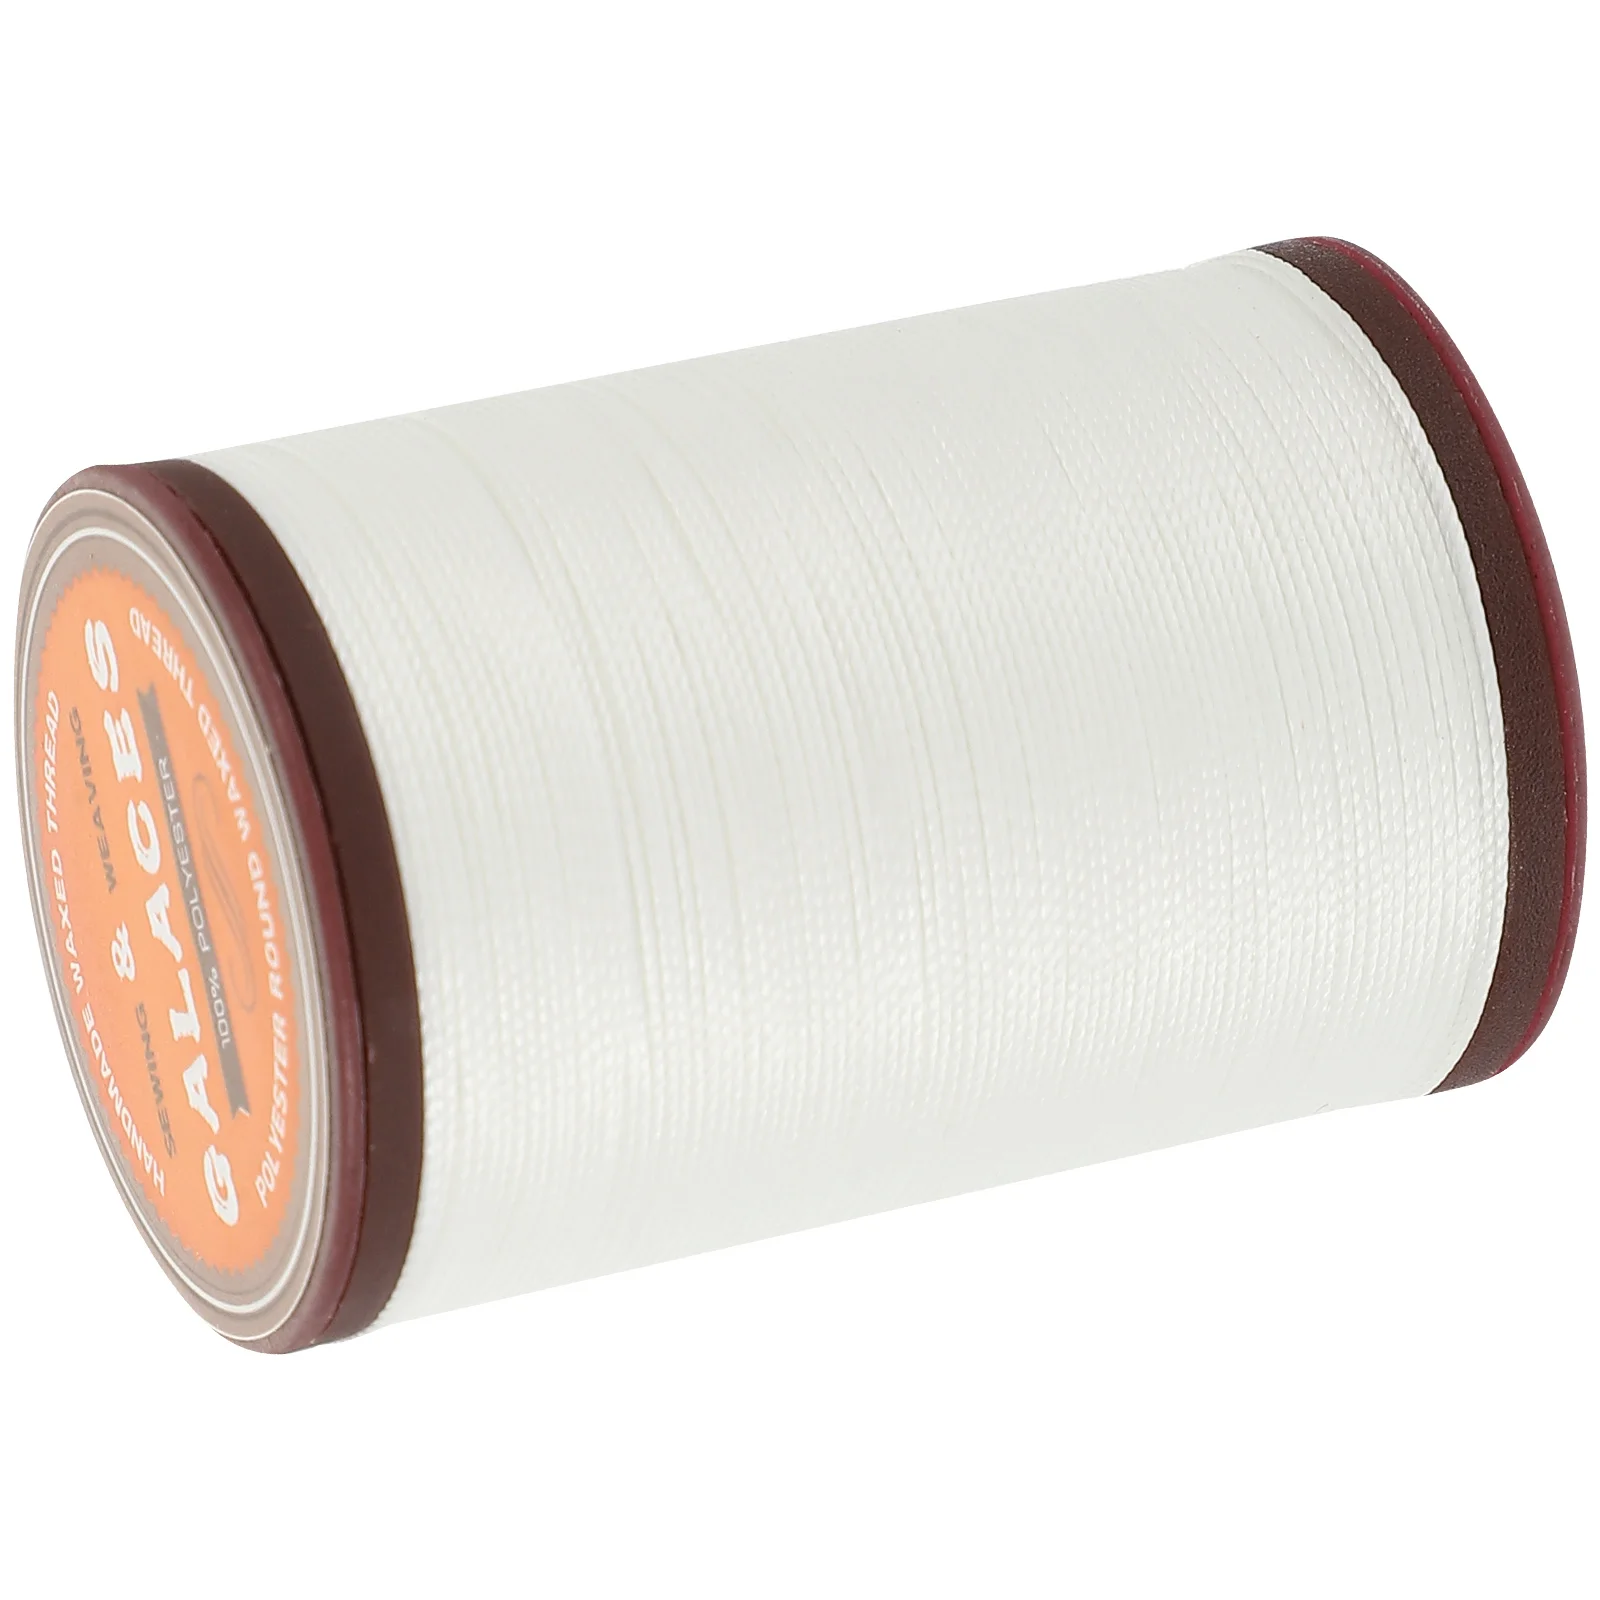 Купи Thread Sewingwaxedwax Stitching Cord Round Machine Polyester Kit Hand Craft Braided Line Weavingbinding Book String Bookbinding за 209 рублей в магазине AliExpress